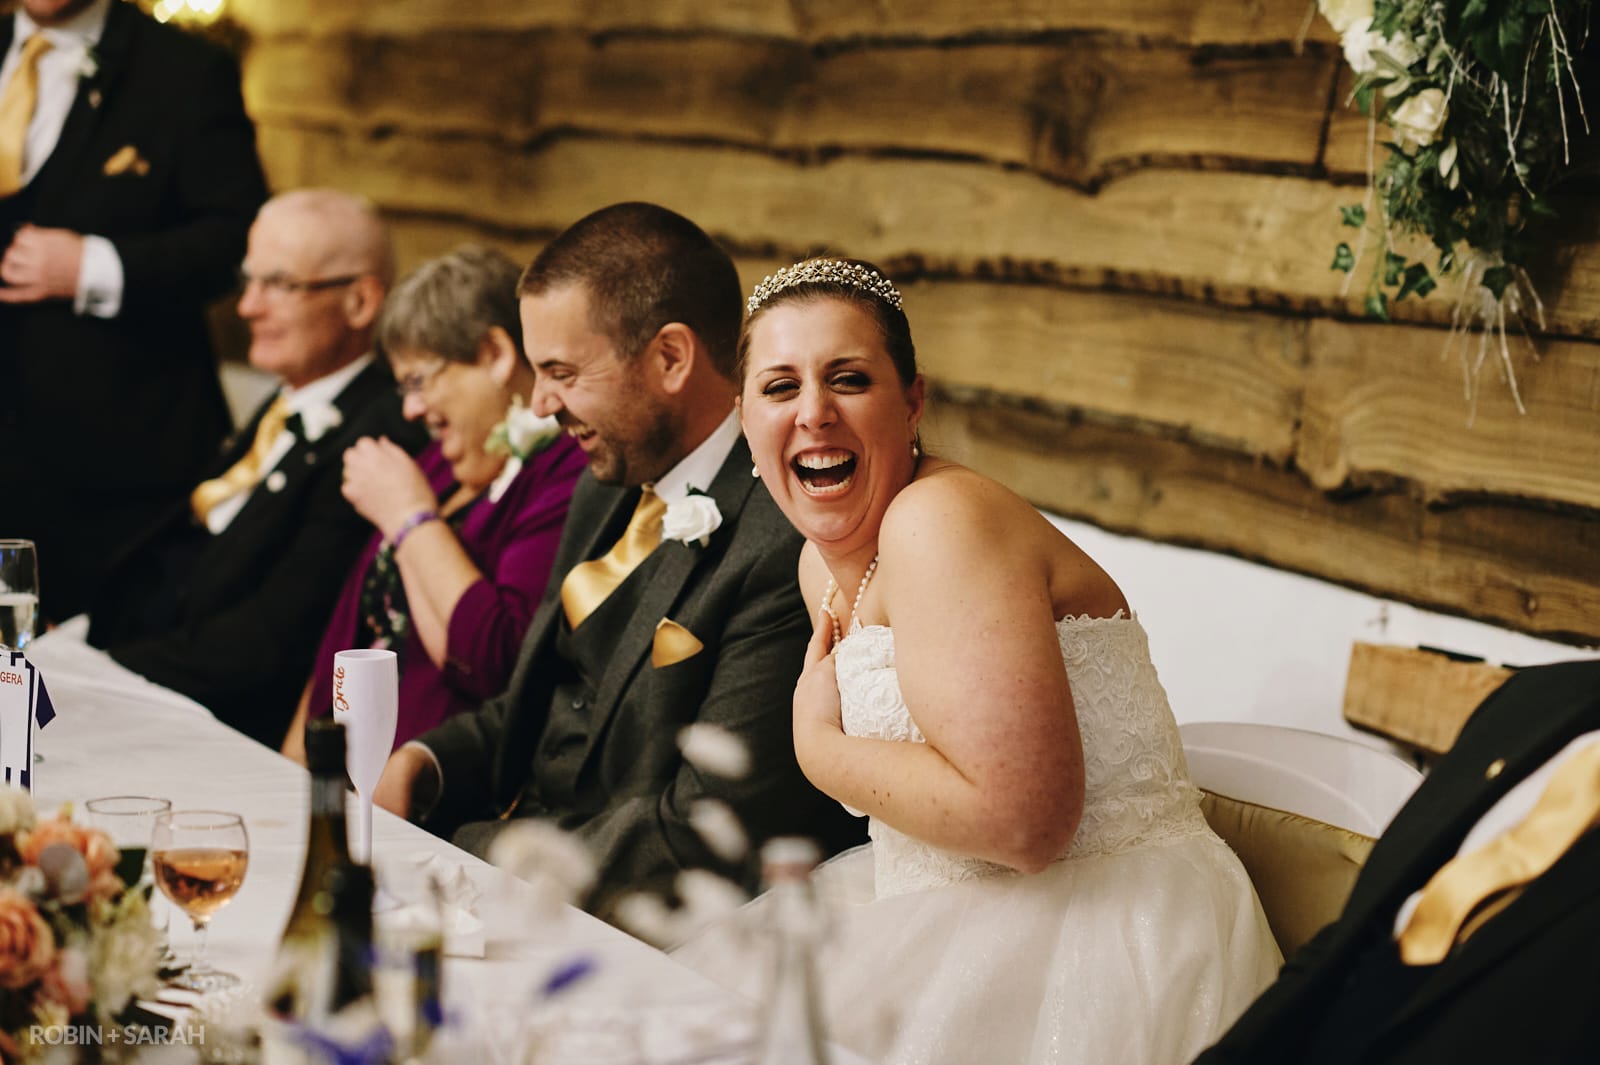 Wedding speeches in wooden barn